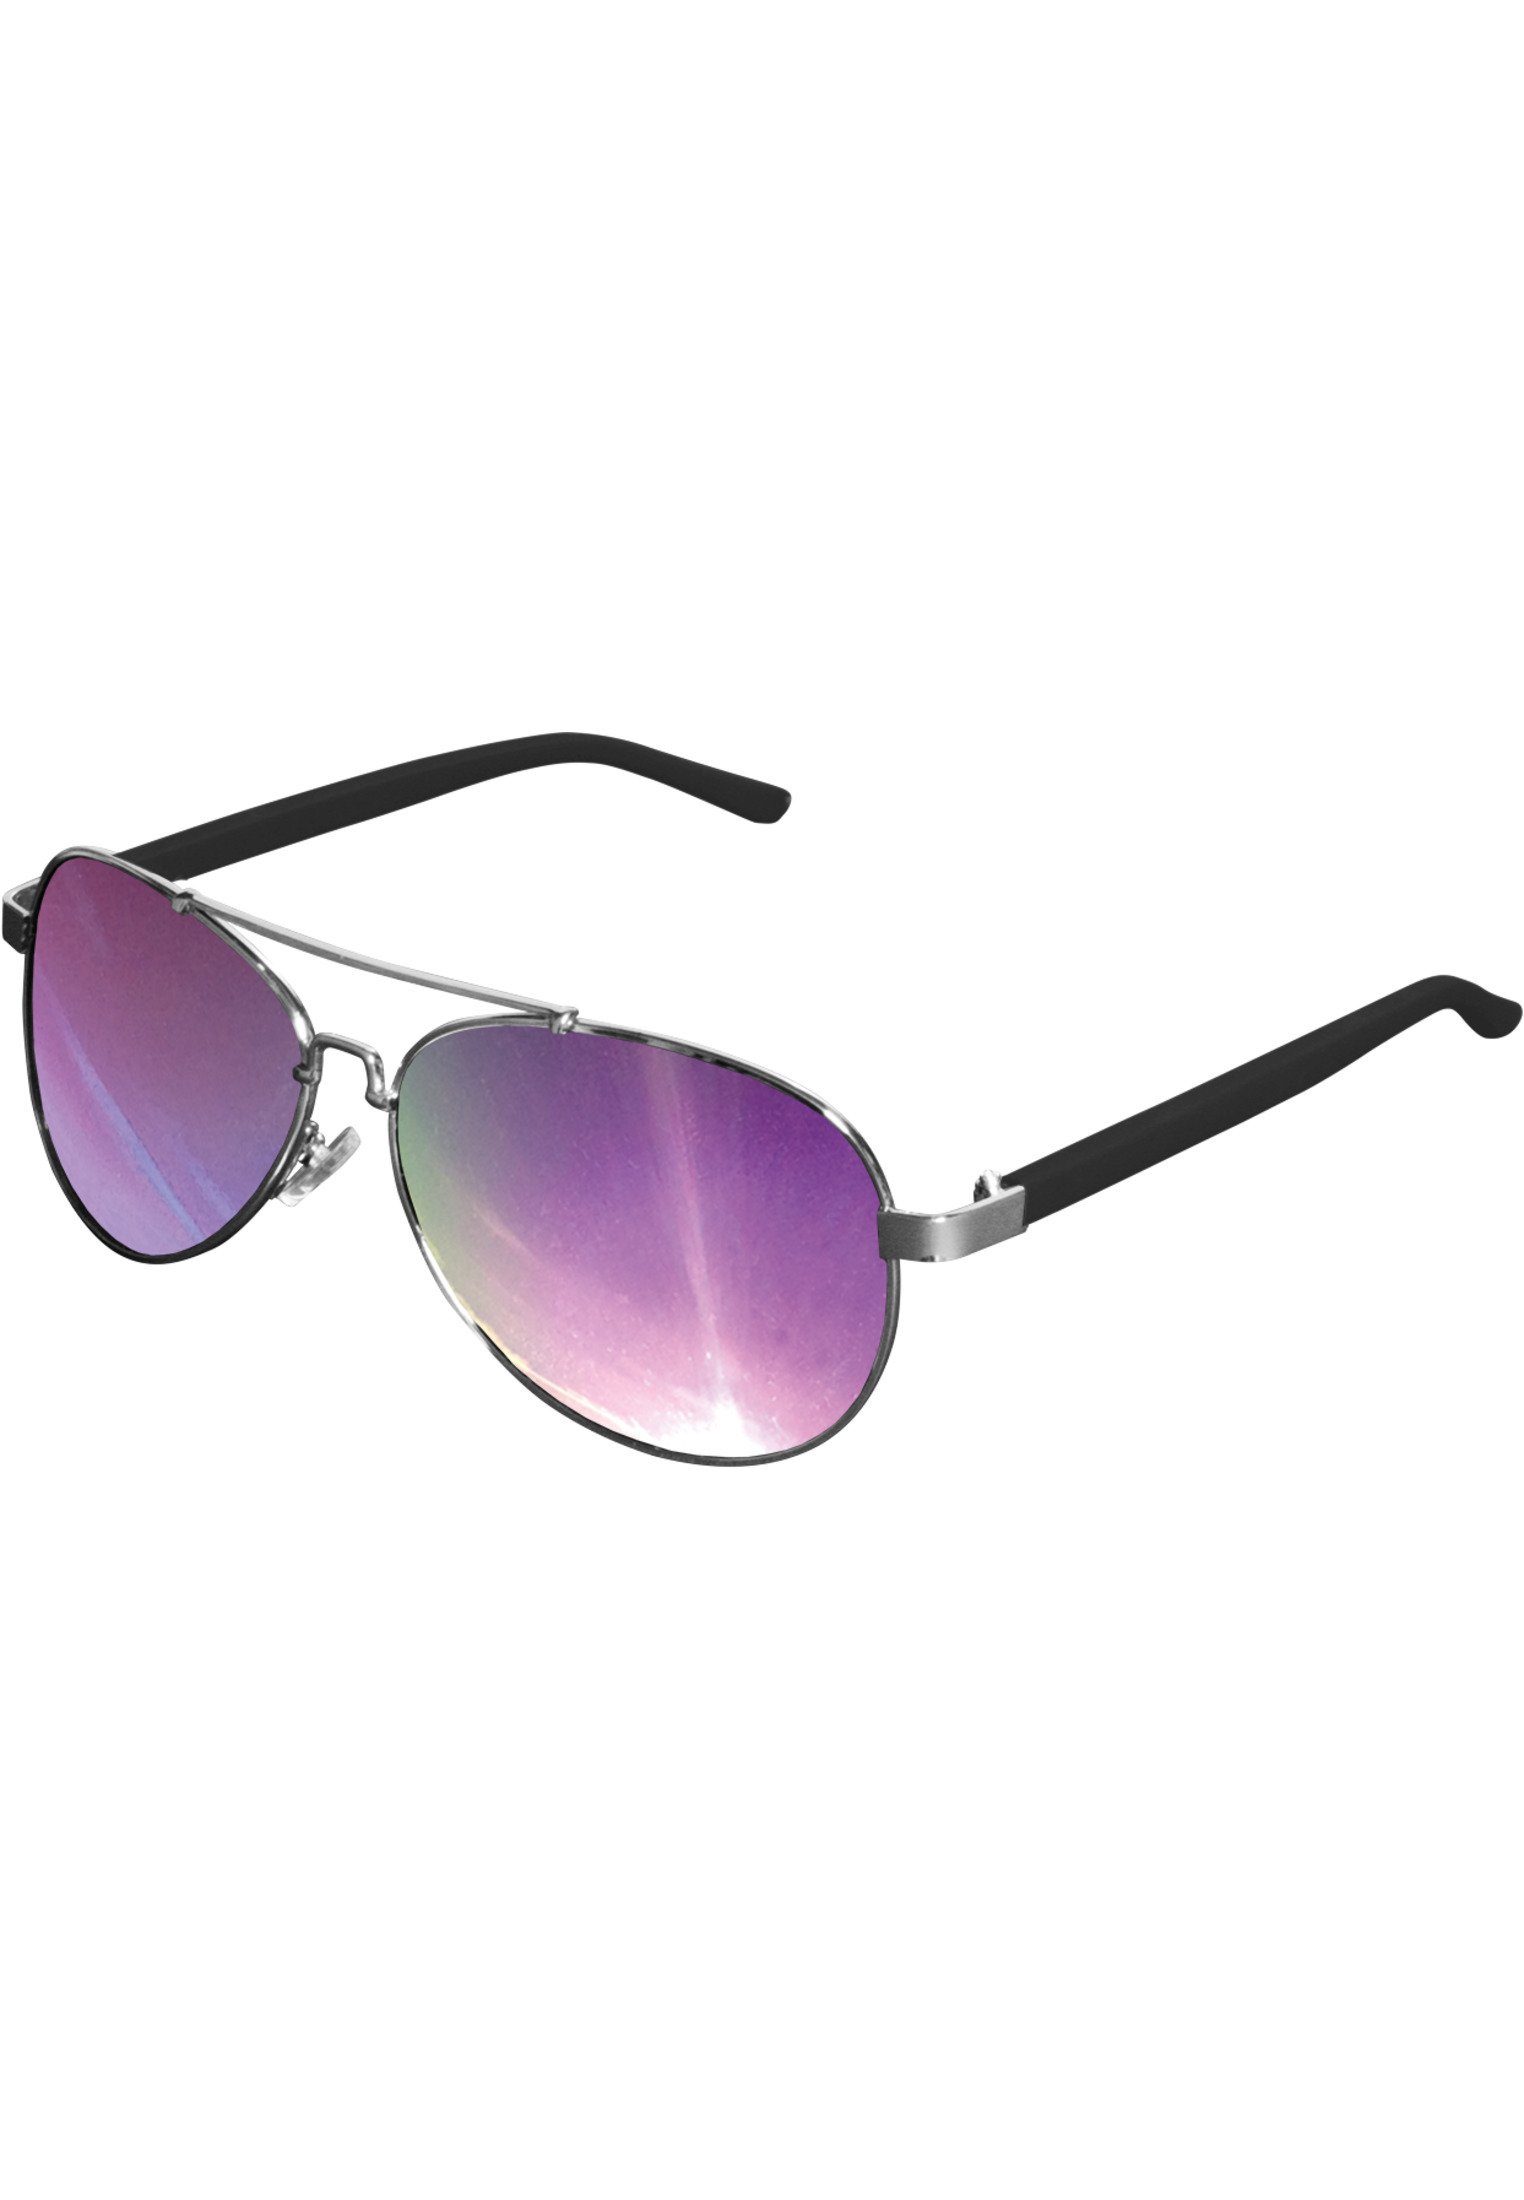 MSTRDS Sonnenbrille Accessoires Sunglasses Mumbo Mirror silver/purple